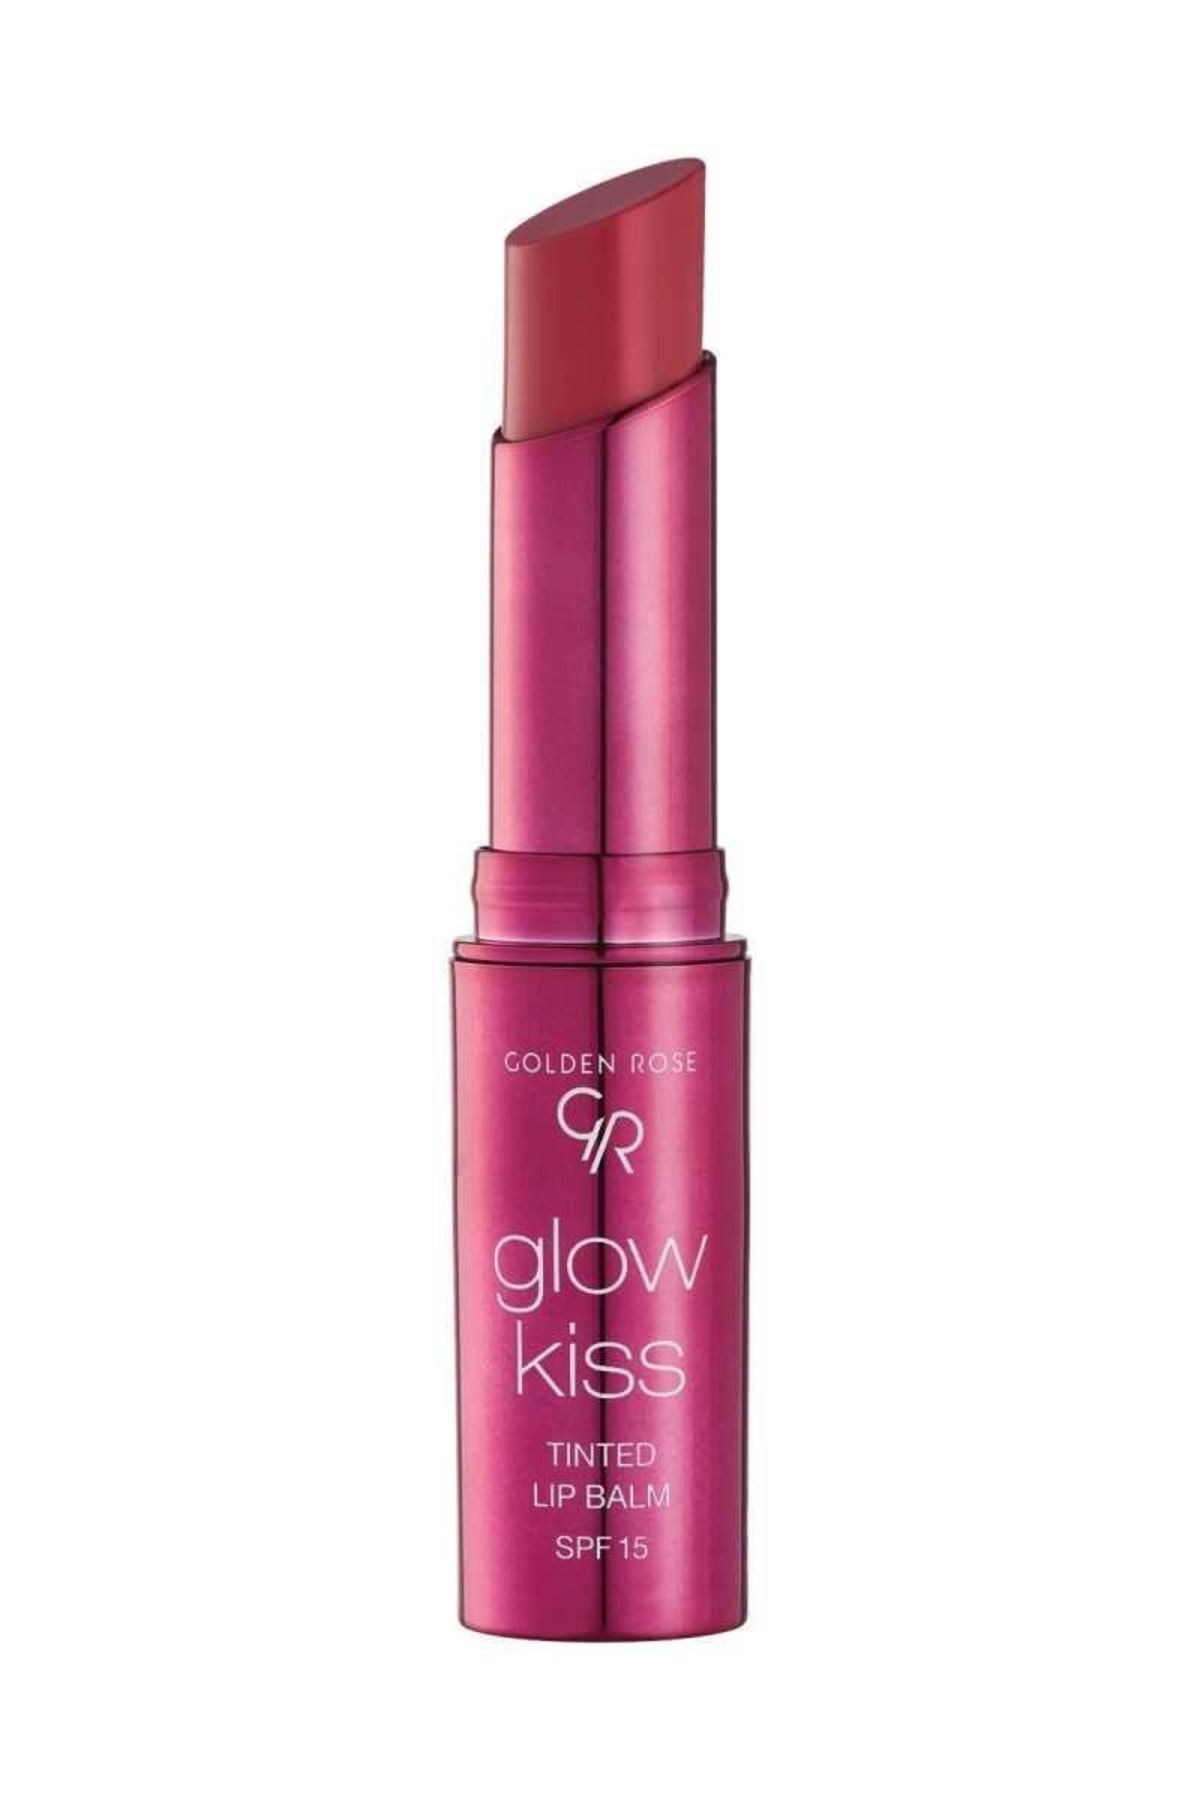 Golden Rose Glow Kiss Tinted Lip Balm Ruj 03